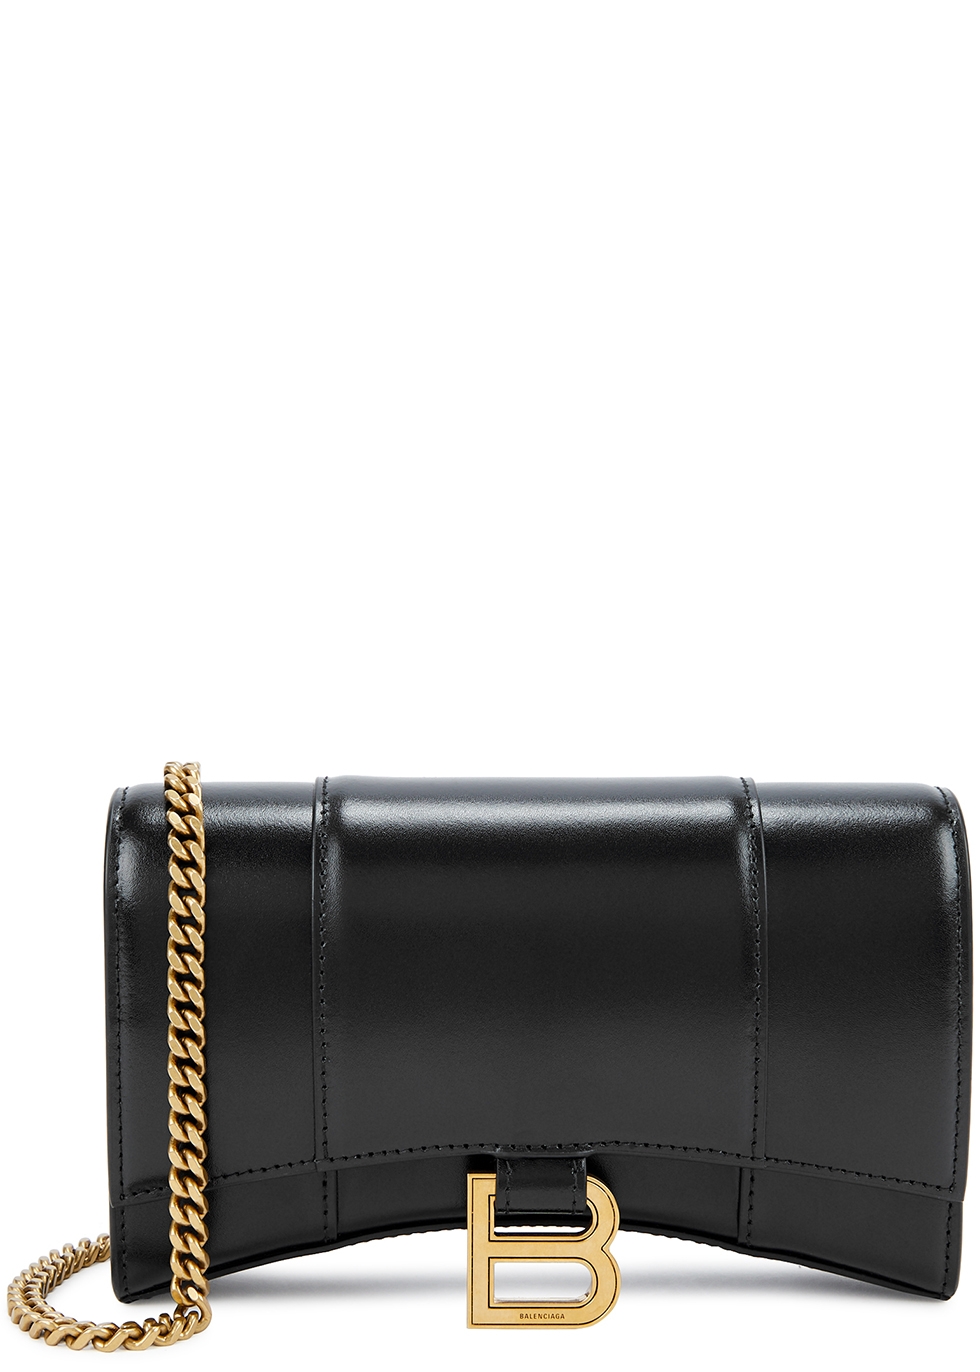 Mua Túi Đeo Vai Balenciaga Wallet Black Calf Leather Shoulder Bag Màu Đen  Nhũ  Balenciaga  Mua tại Vua Hàng Hiệu h043232